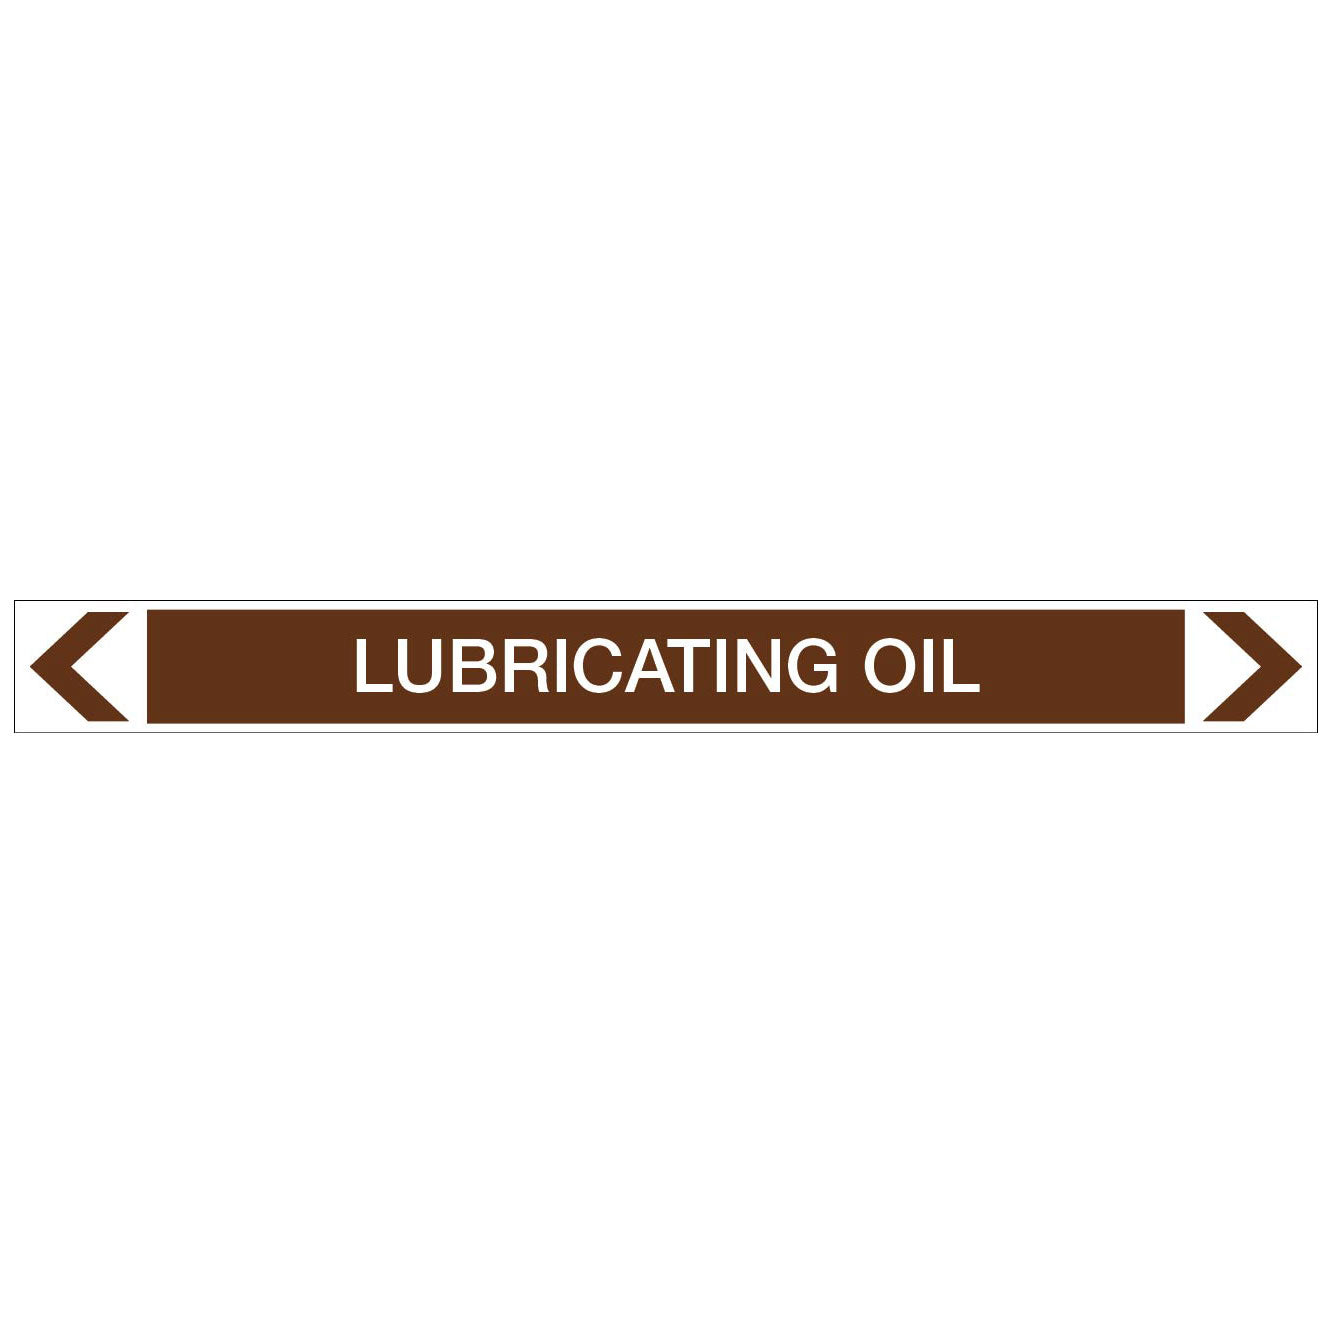 Oils - Lubricating Oil - Pipe Marker Sticker